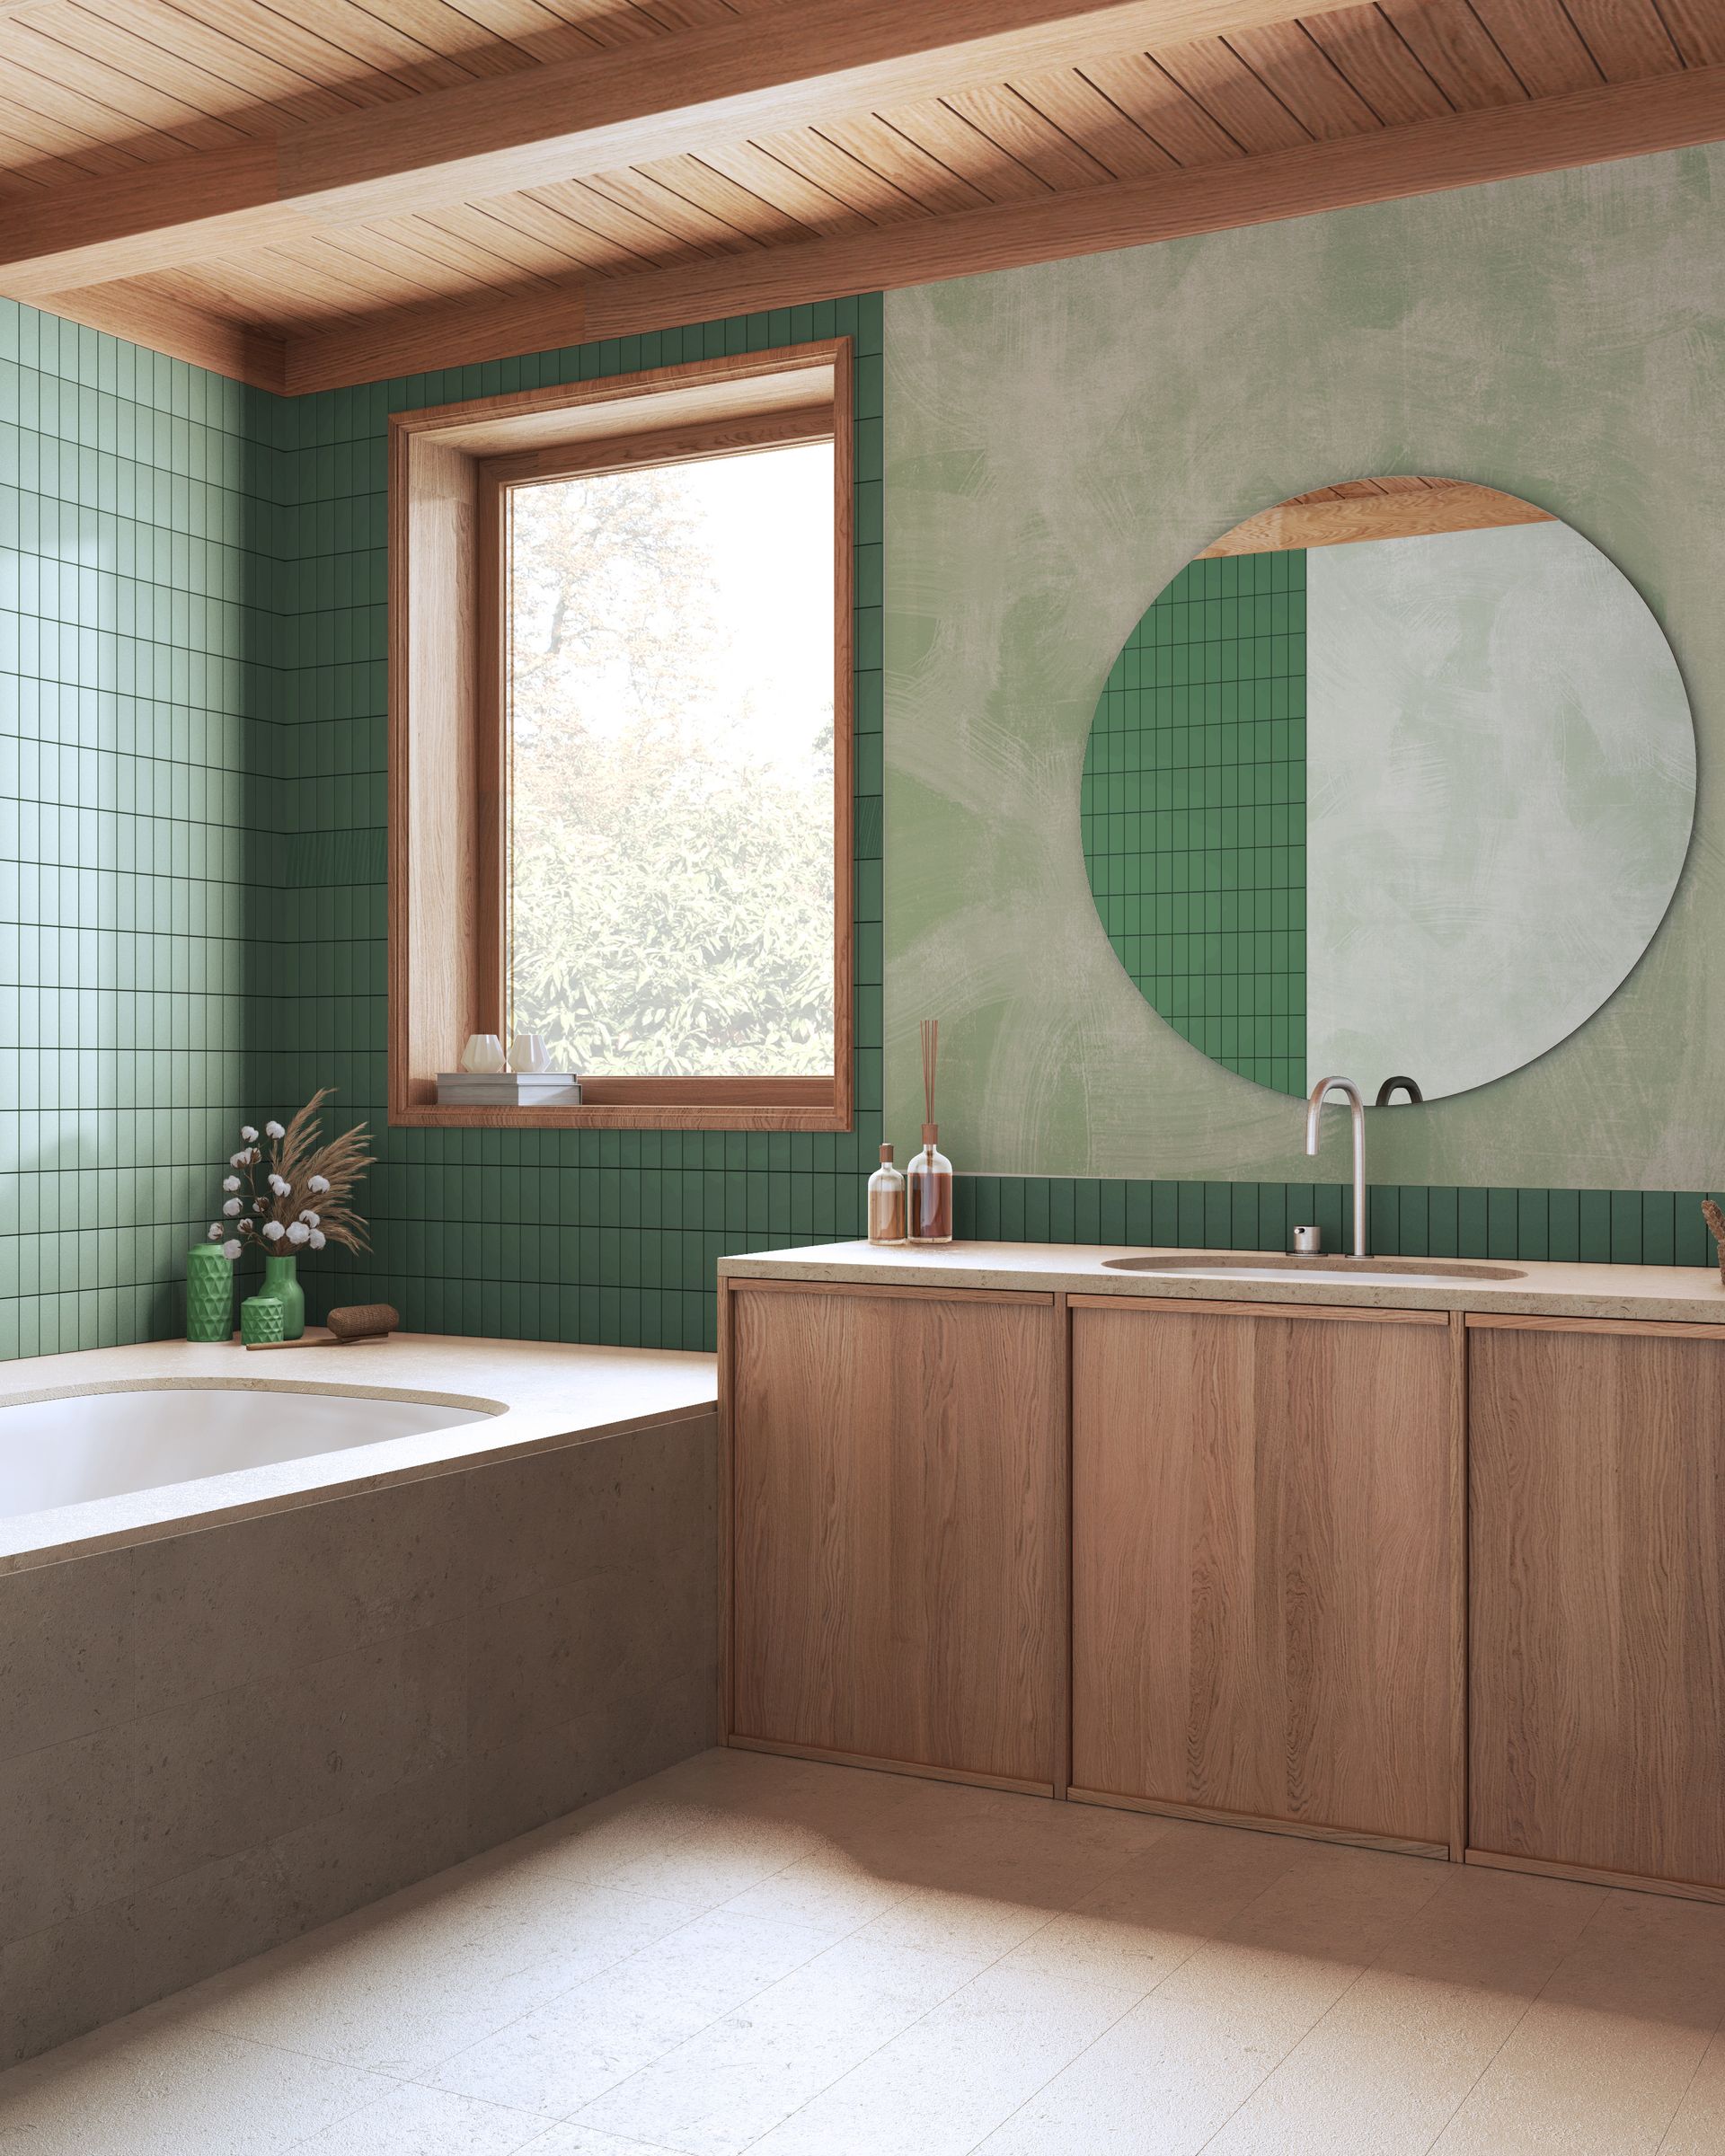 Salle de bains en bois et verte